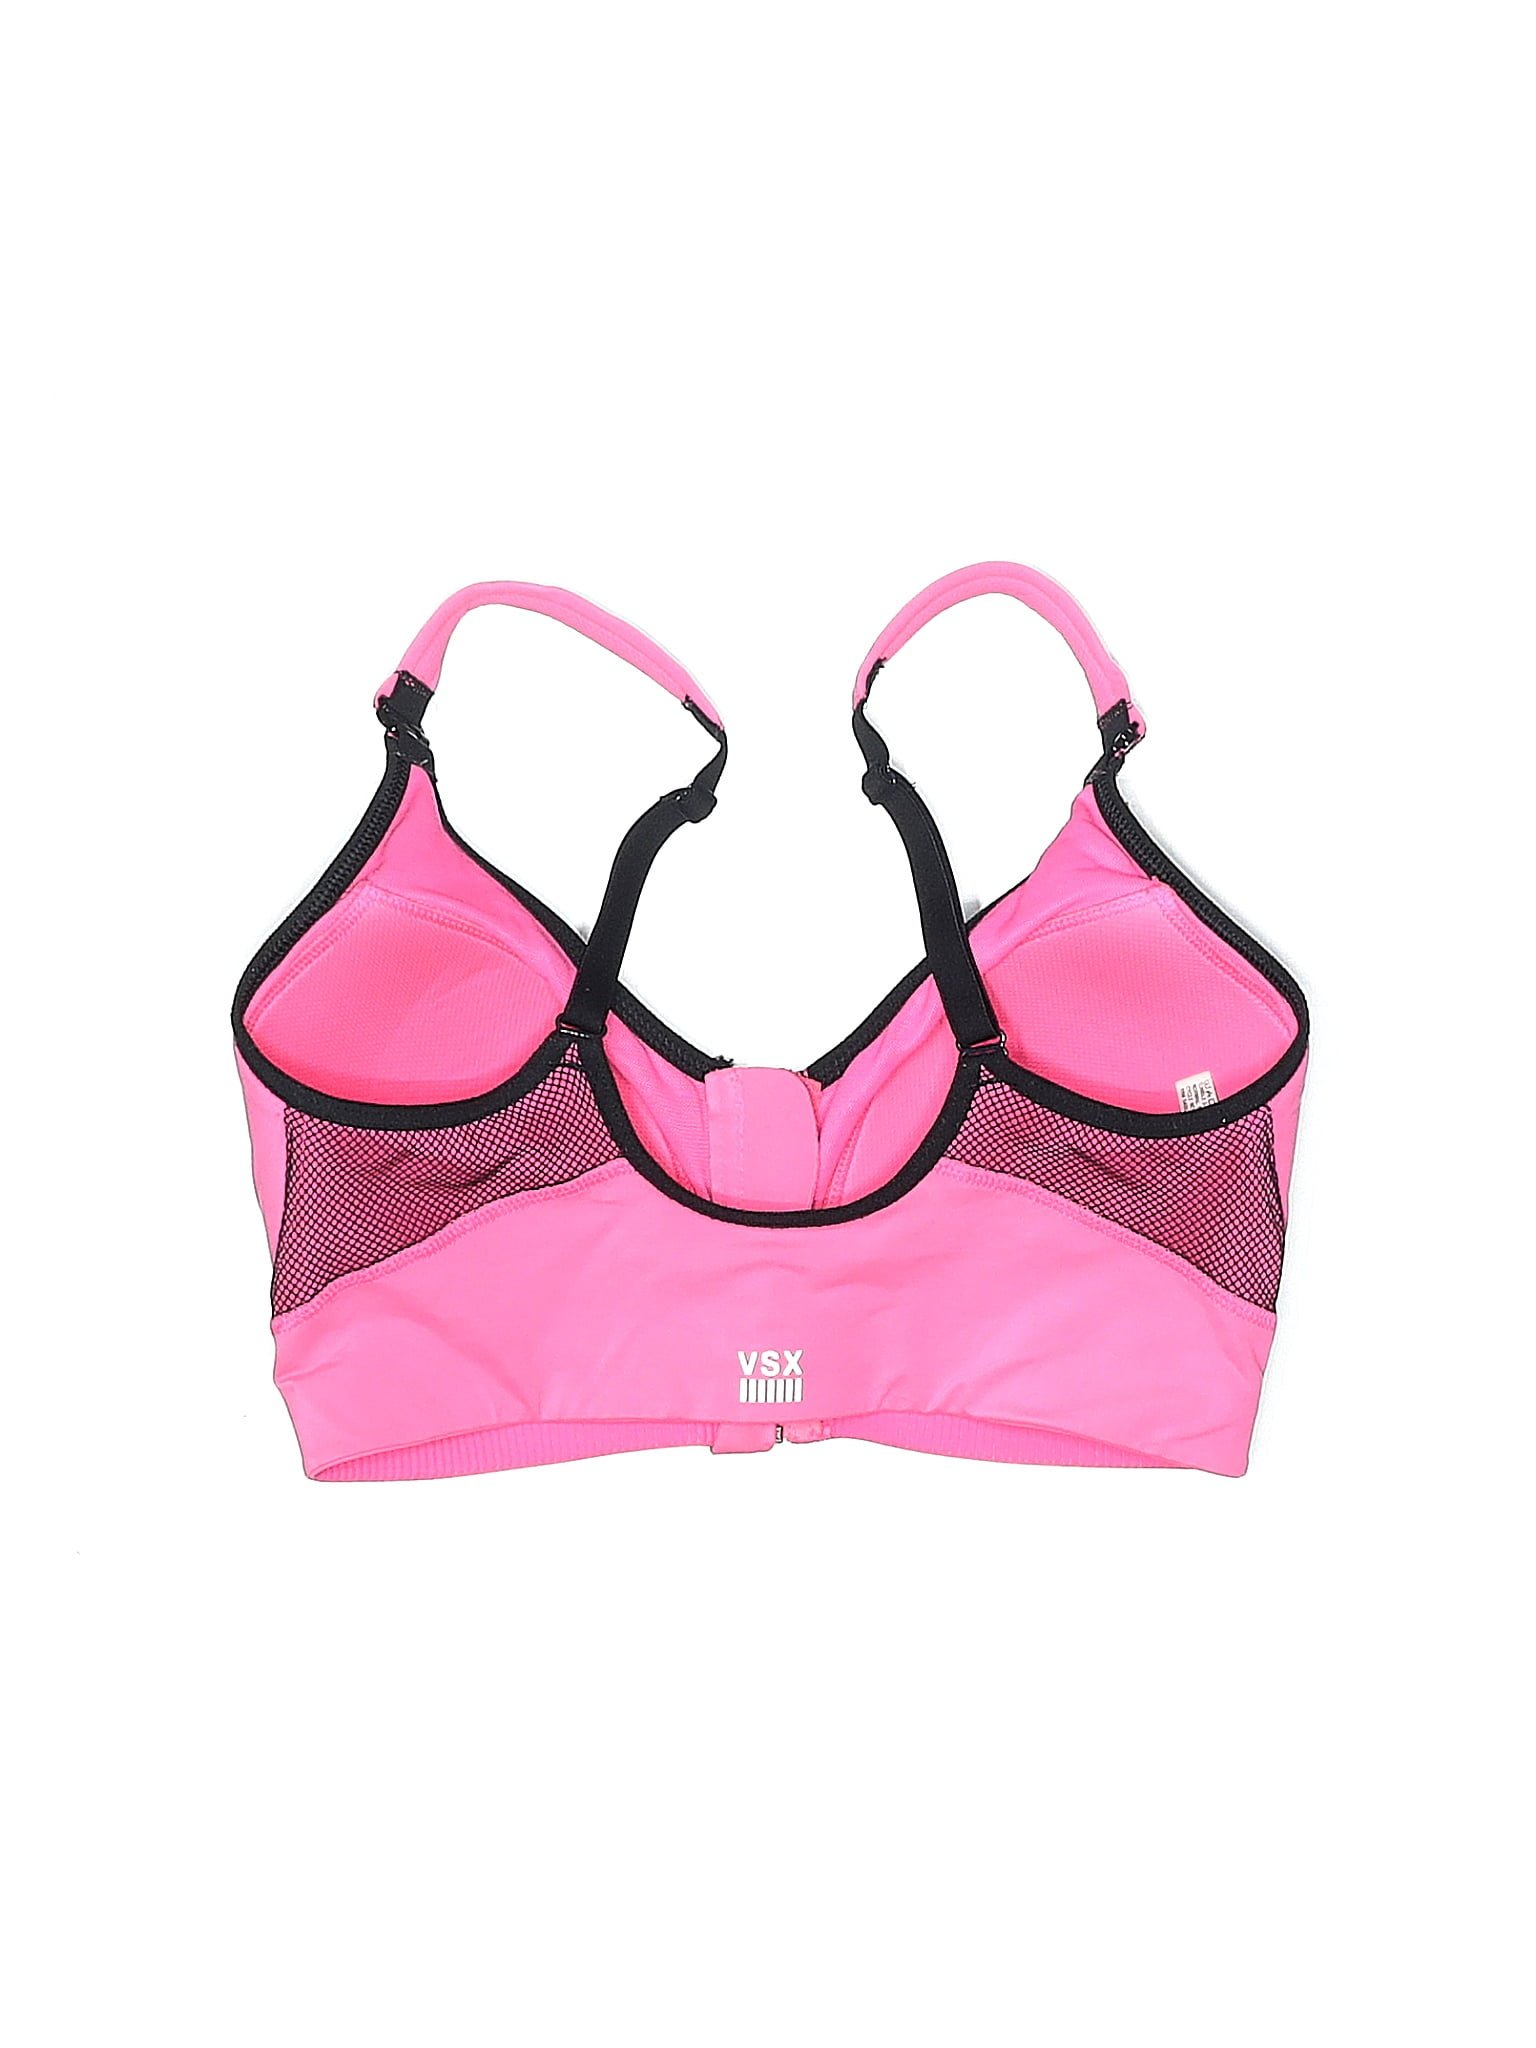 VSX Sport Pink Sports Bra Size Sm (32D) - 54% off